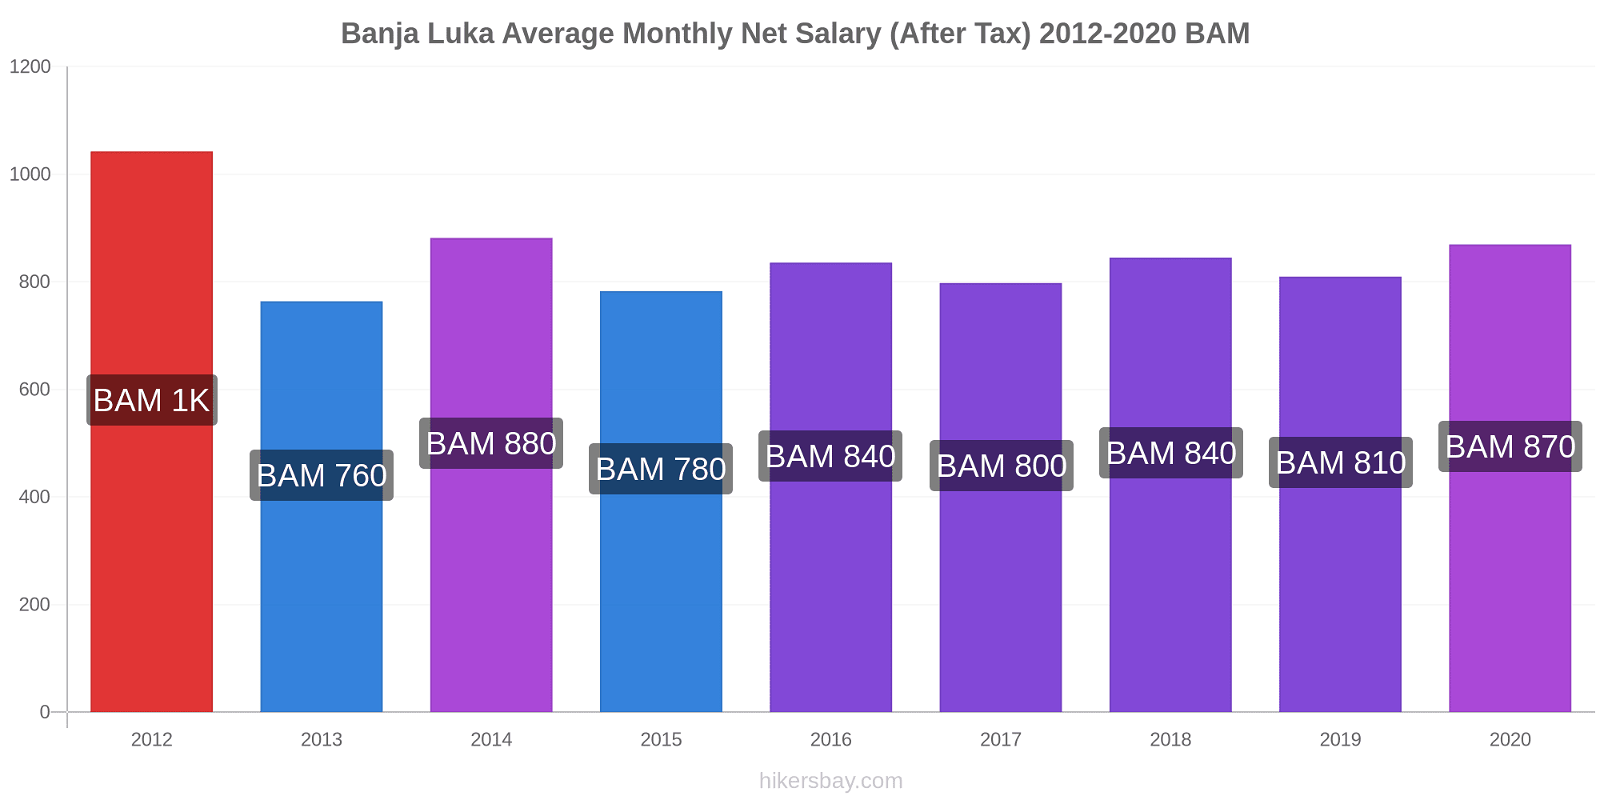 Banja Luka price changes Average Monthly Net Salary (After Tax) hikersbay.com